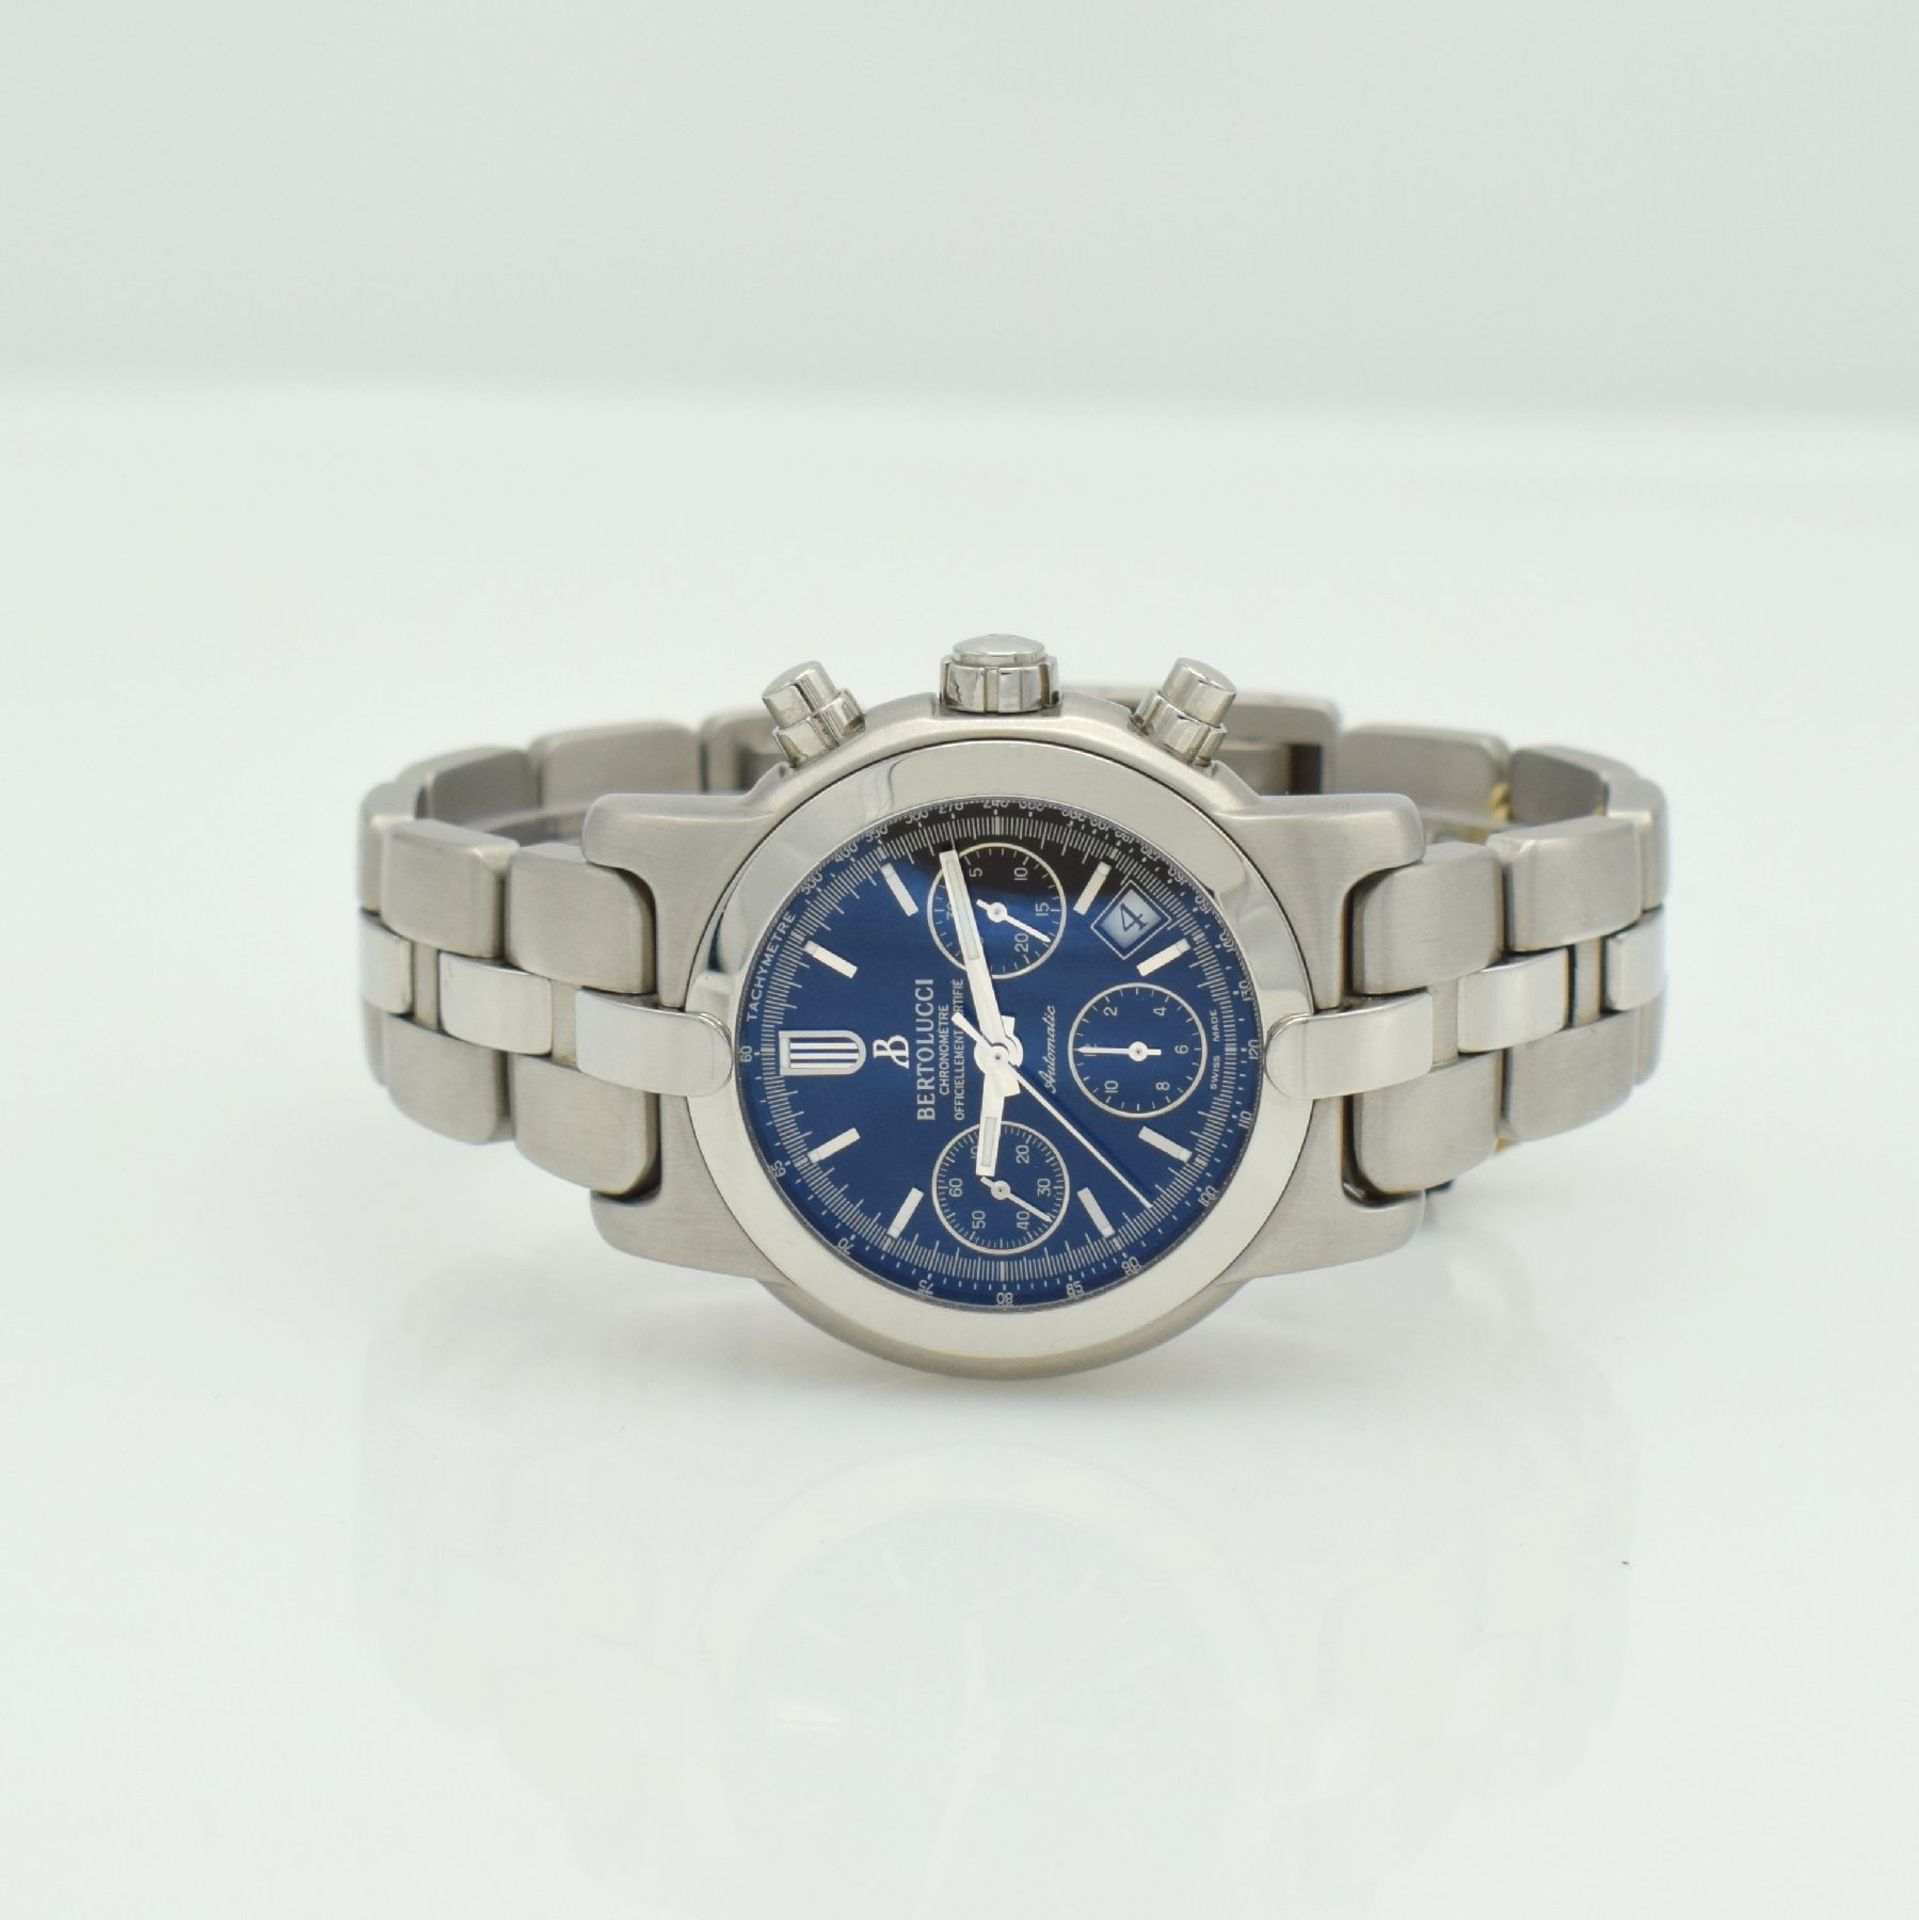 BERTOLUCCI chronometer gents wristwatch with chronograph, Switzerland around 2000, self winding,